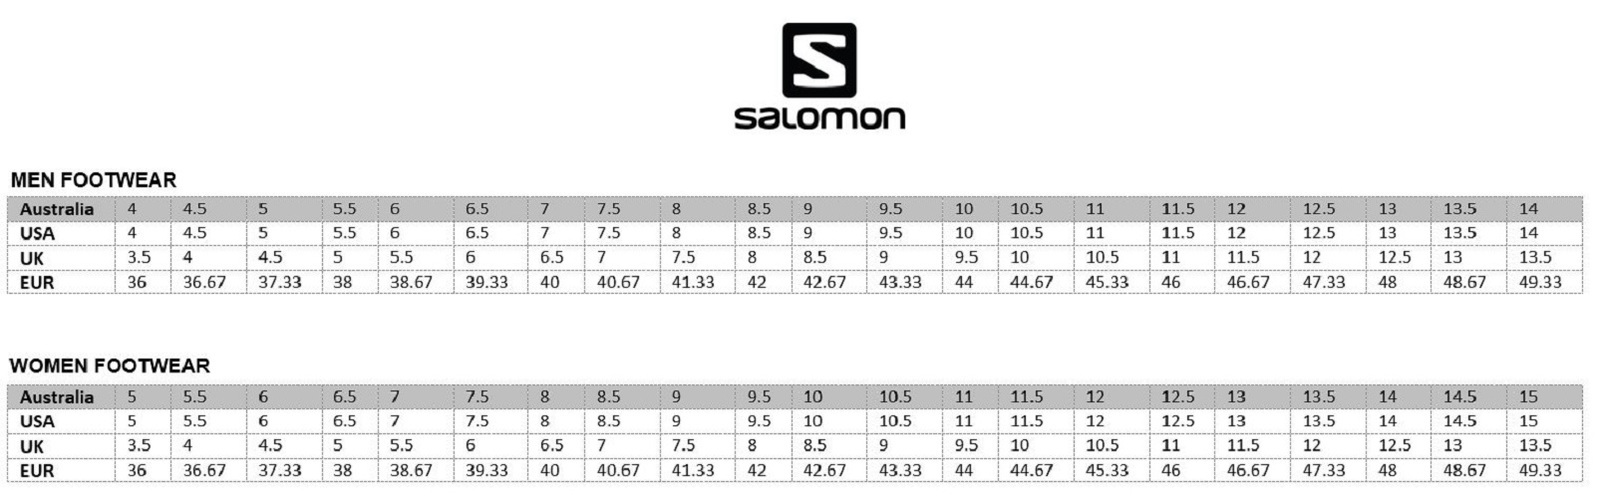 Salomon Shoe Size Chart - www.inf-inet.com